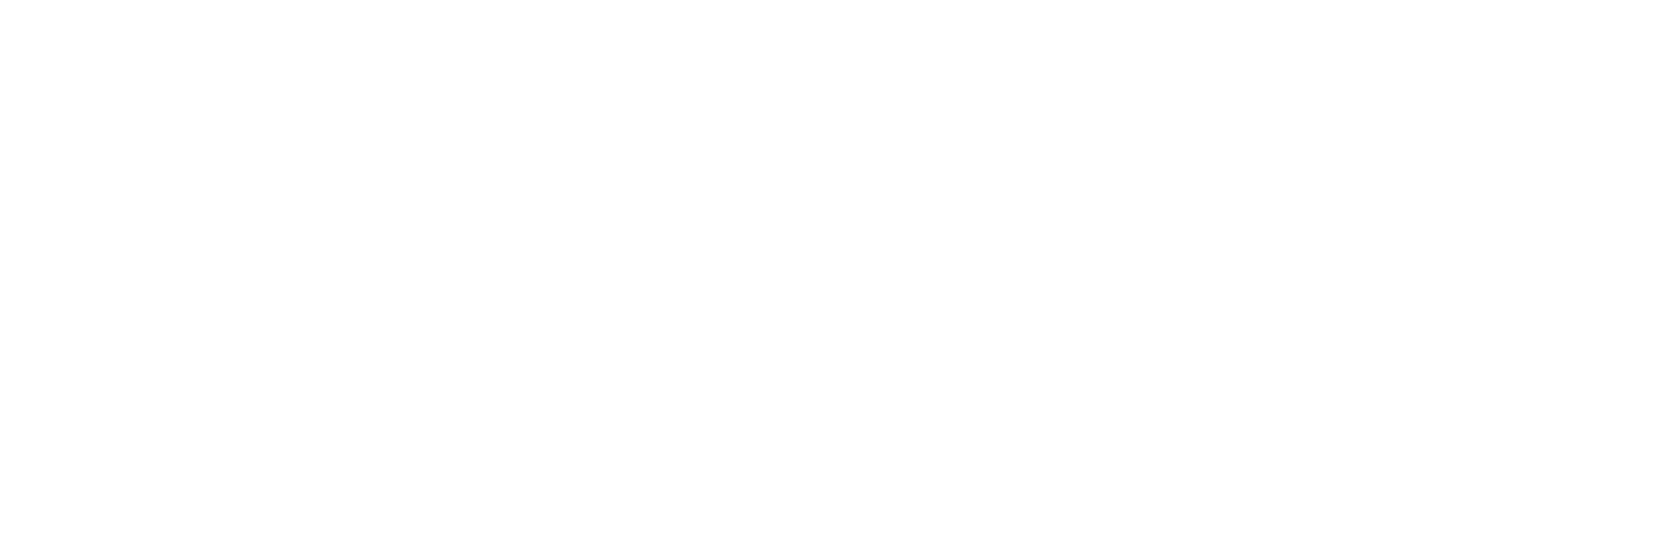 UC Investment Proposal Portal Logo